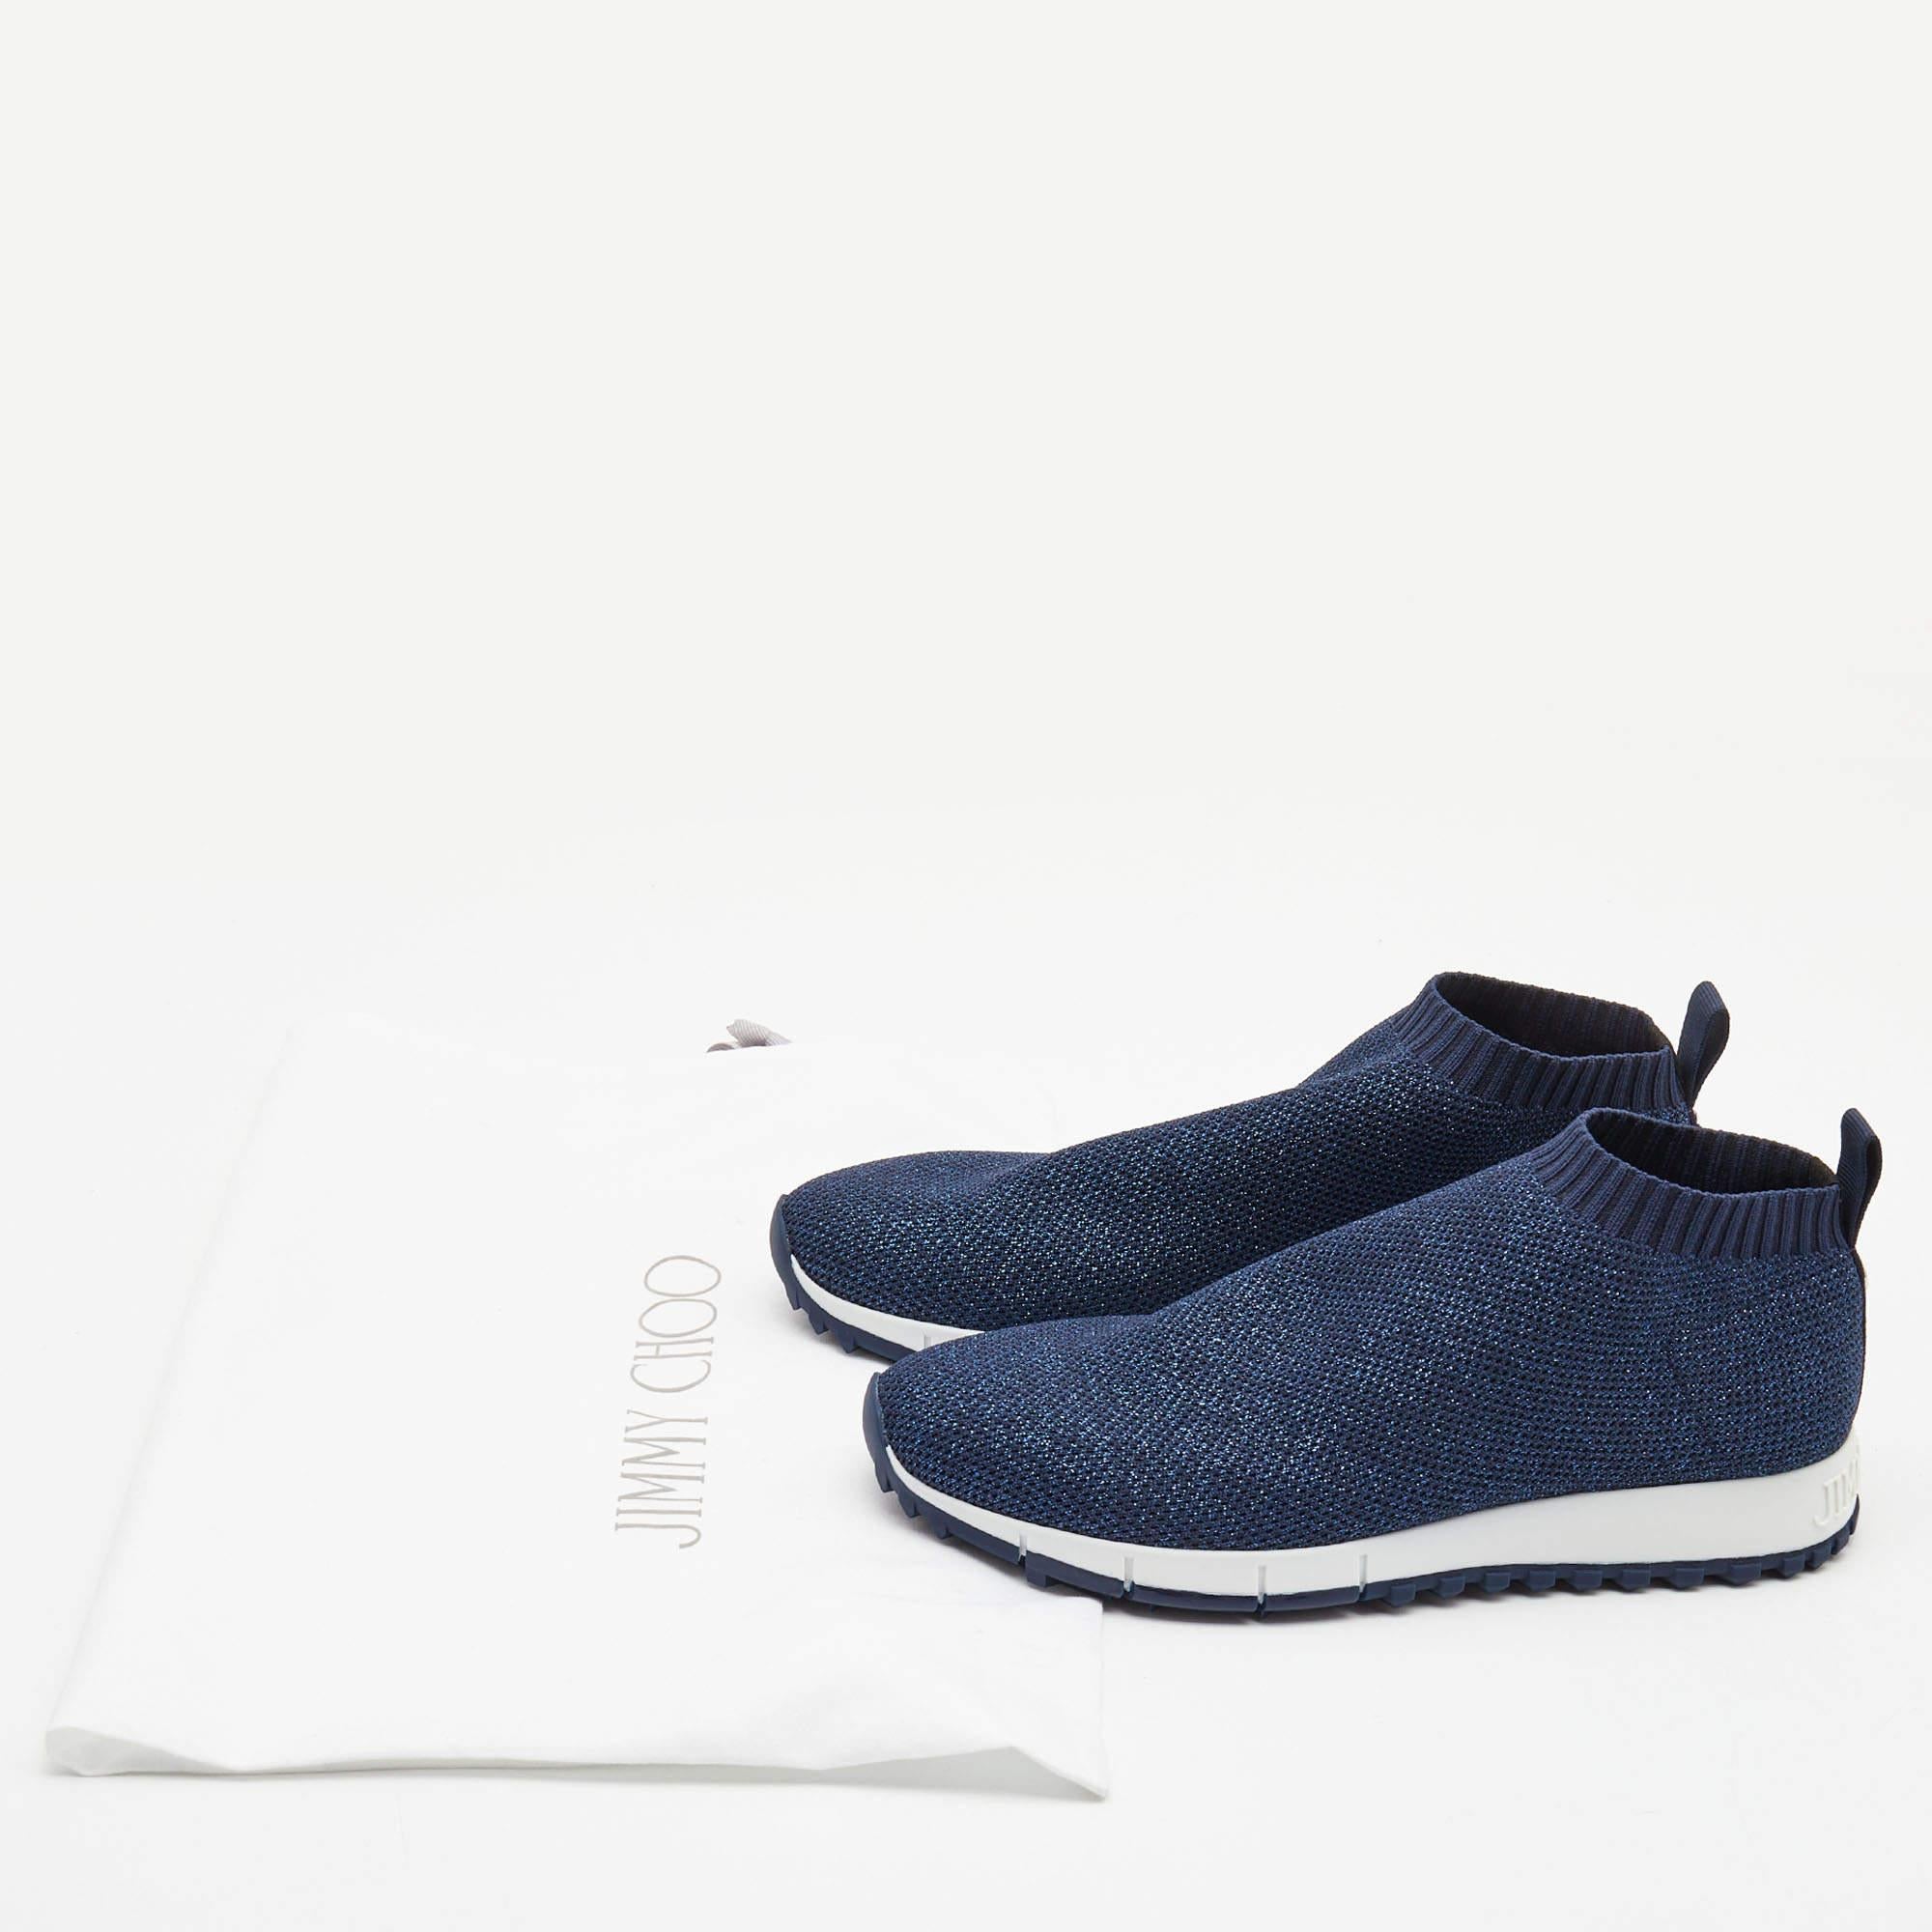 Jimmy Choo Navy Blue Glitter Fabric Low Top Sneakers Size 36.5 4